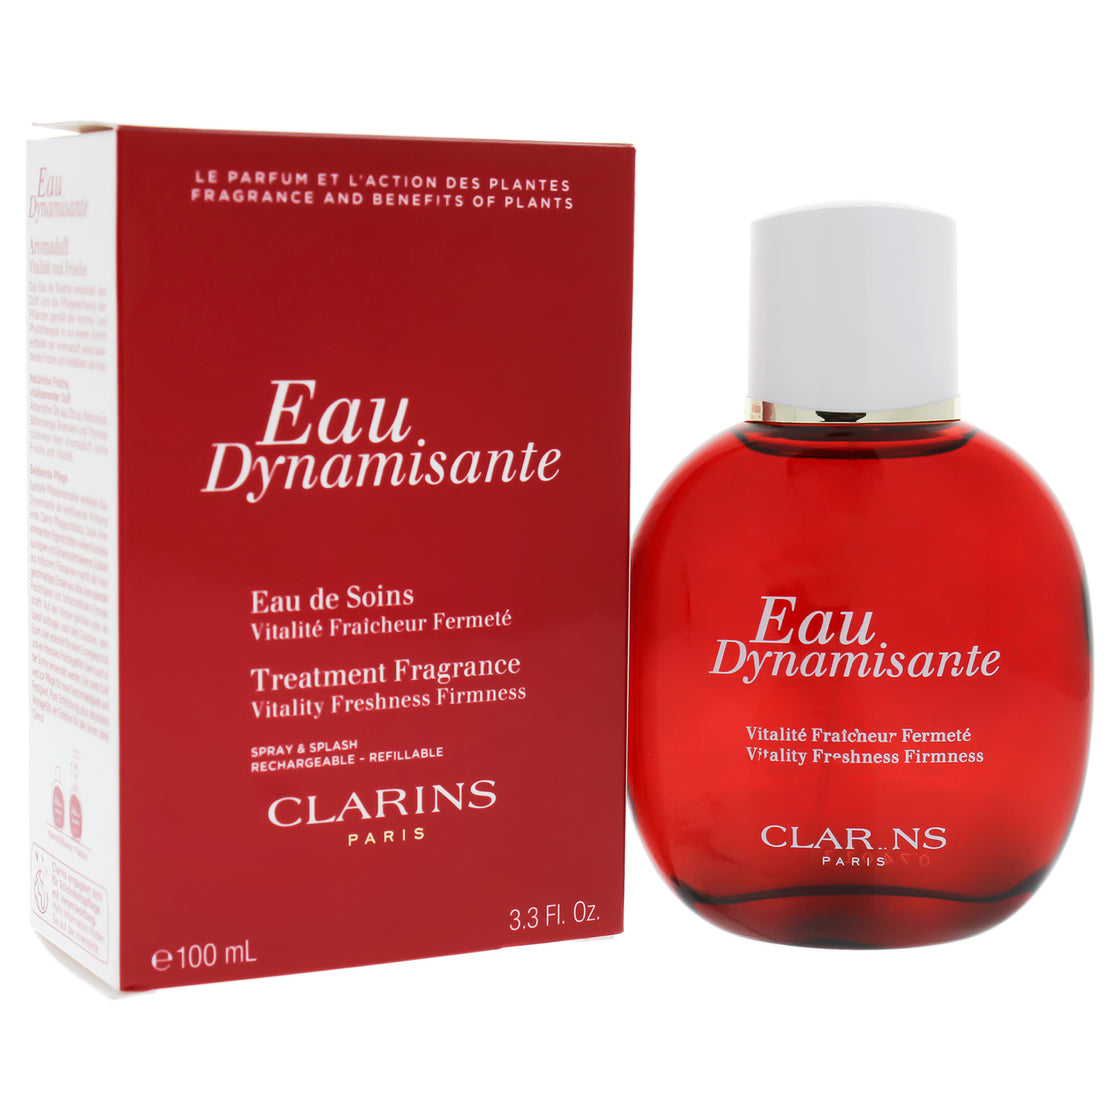 Eau Dynamisante Treatment Fragrance by Clarins for Women - 3.3 oz Treatment